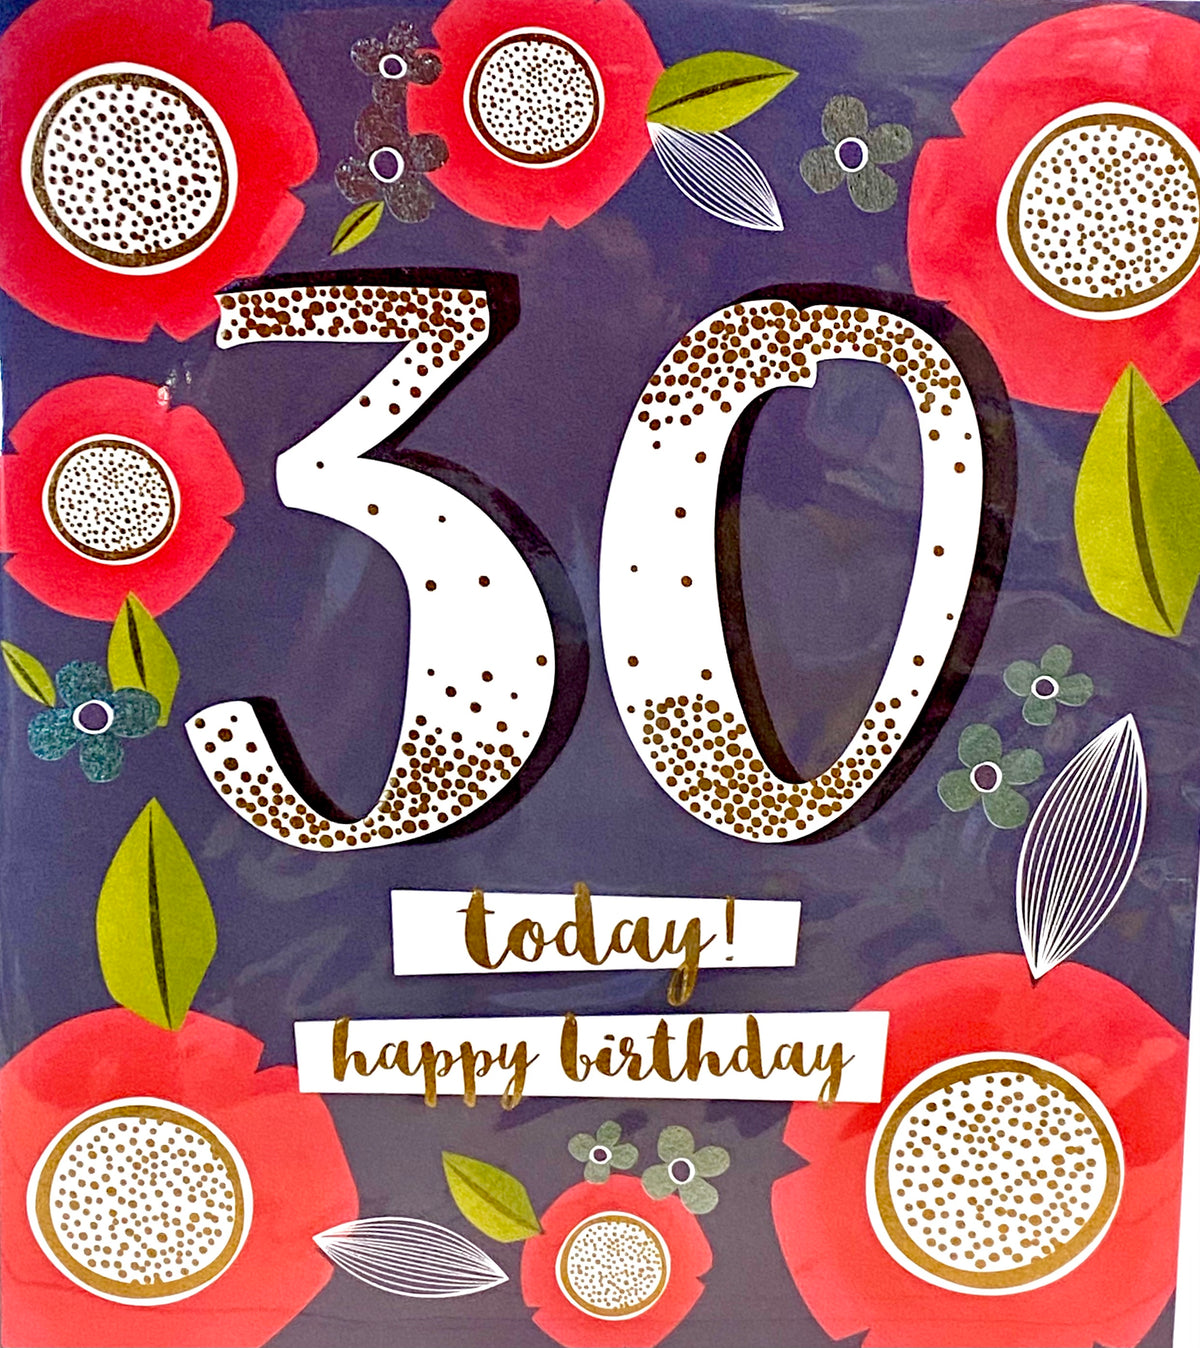 Birthday Card: 30 Today! Happy Birthday